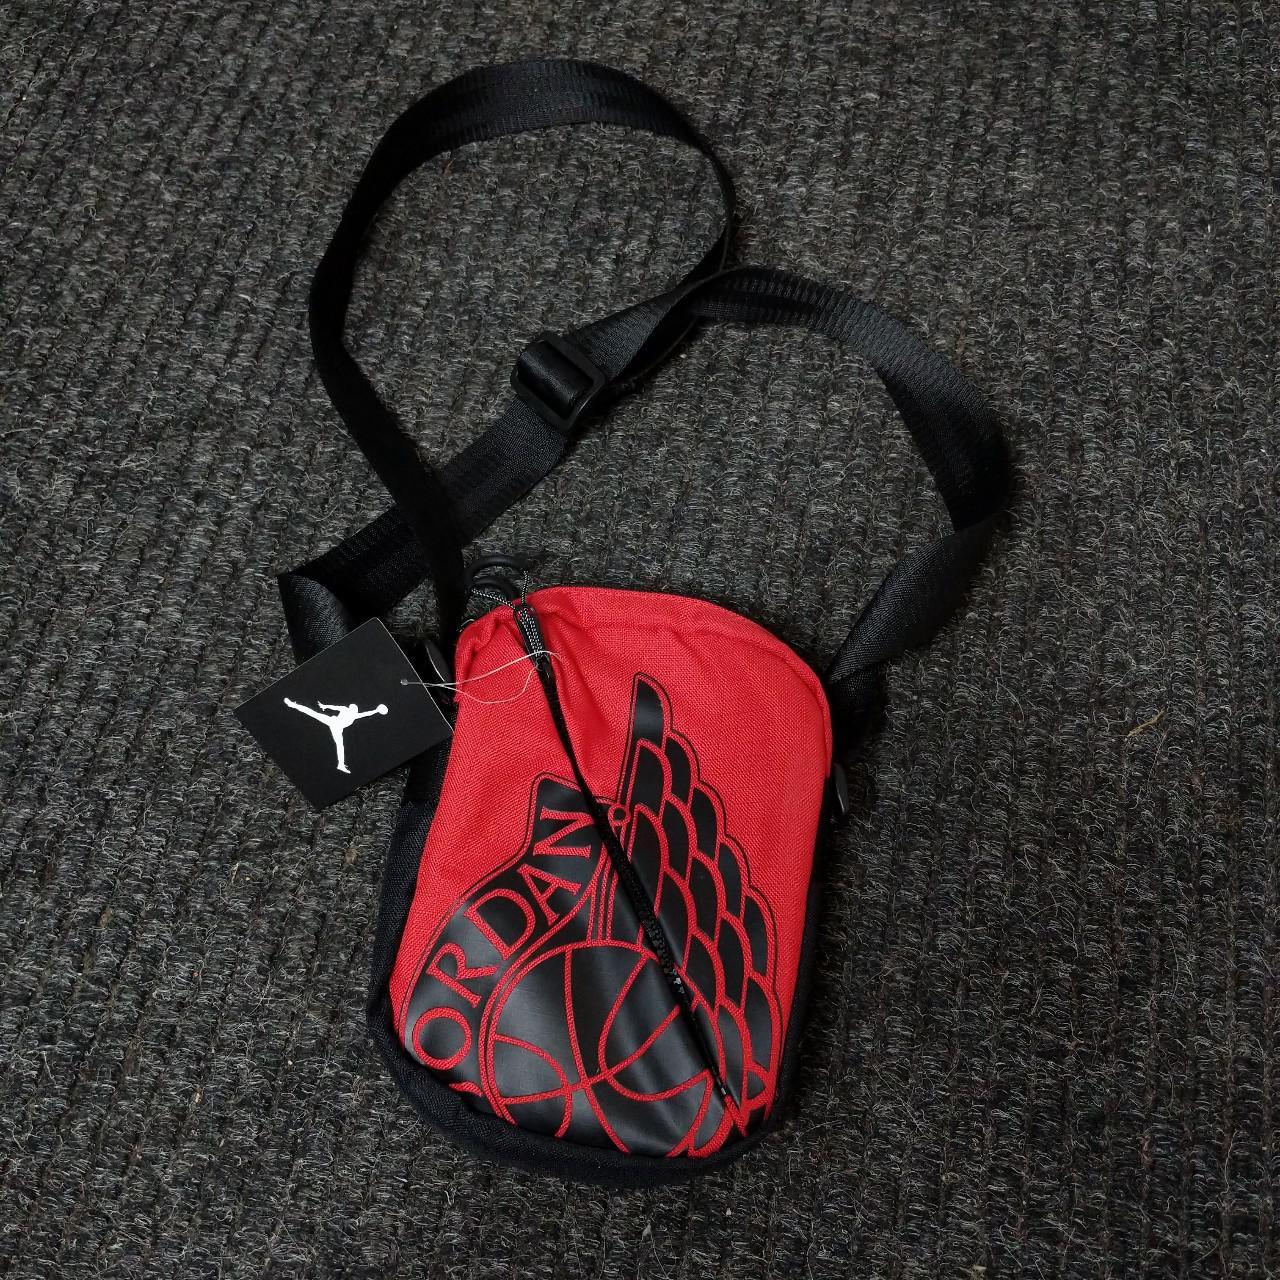 Product Image 1 - Nike Jordan Side Bag

Brand new